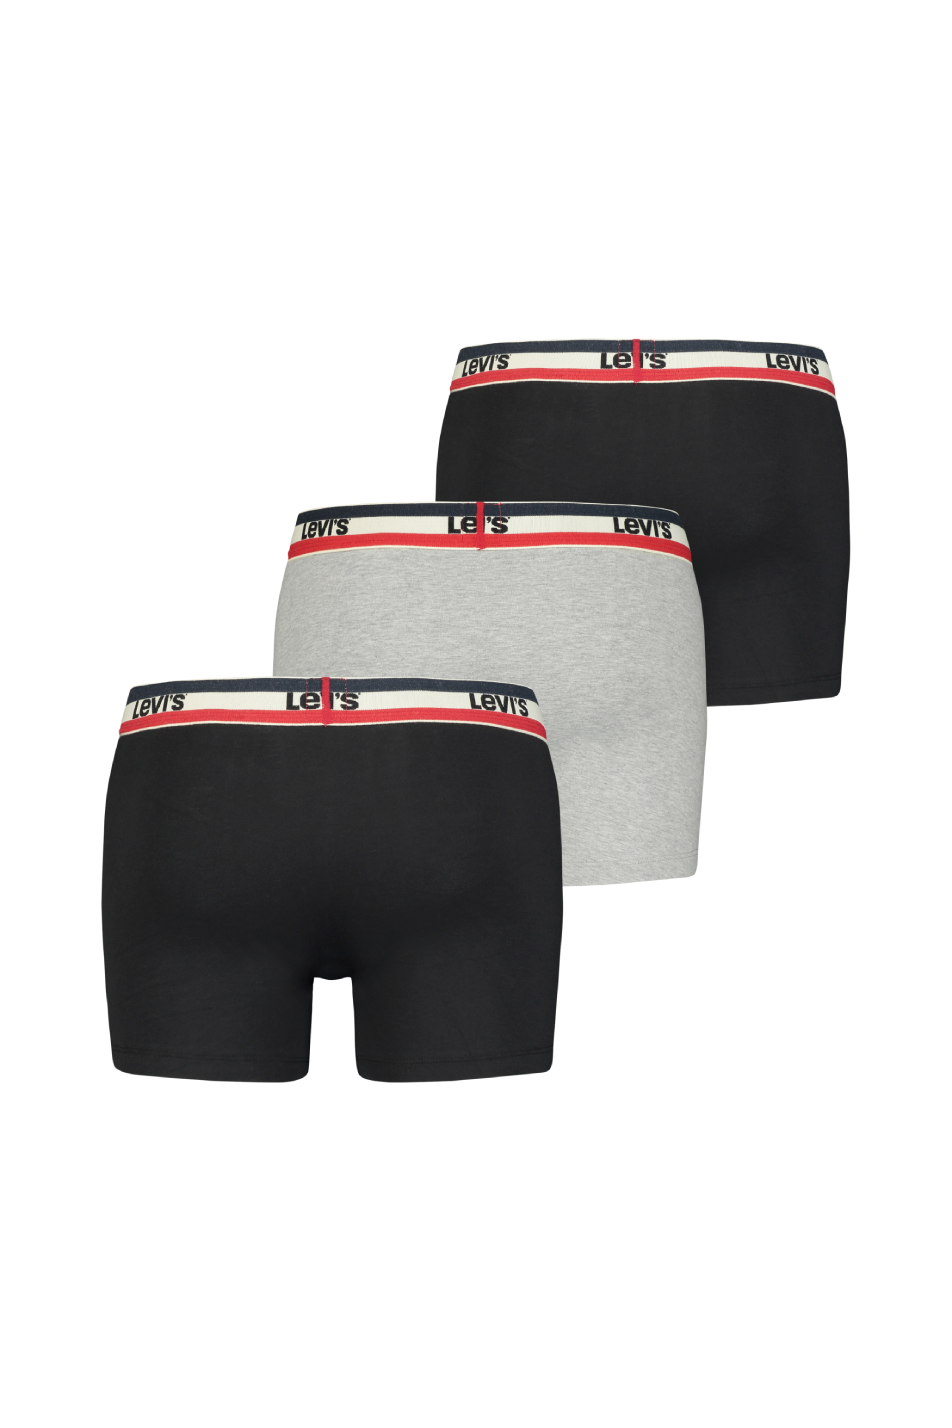 Levi's Men's 3 Pack Sportswear Logo Boxer Brief — Pants & Socks